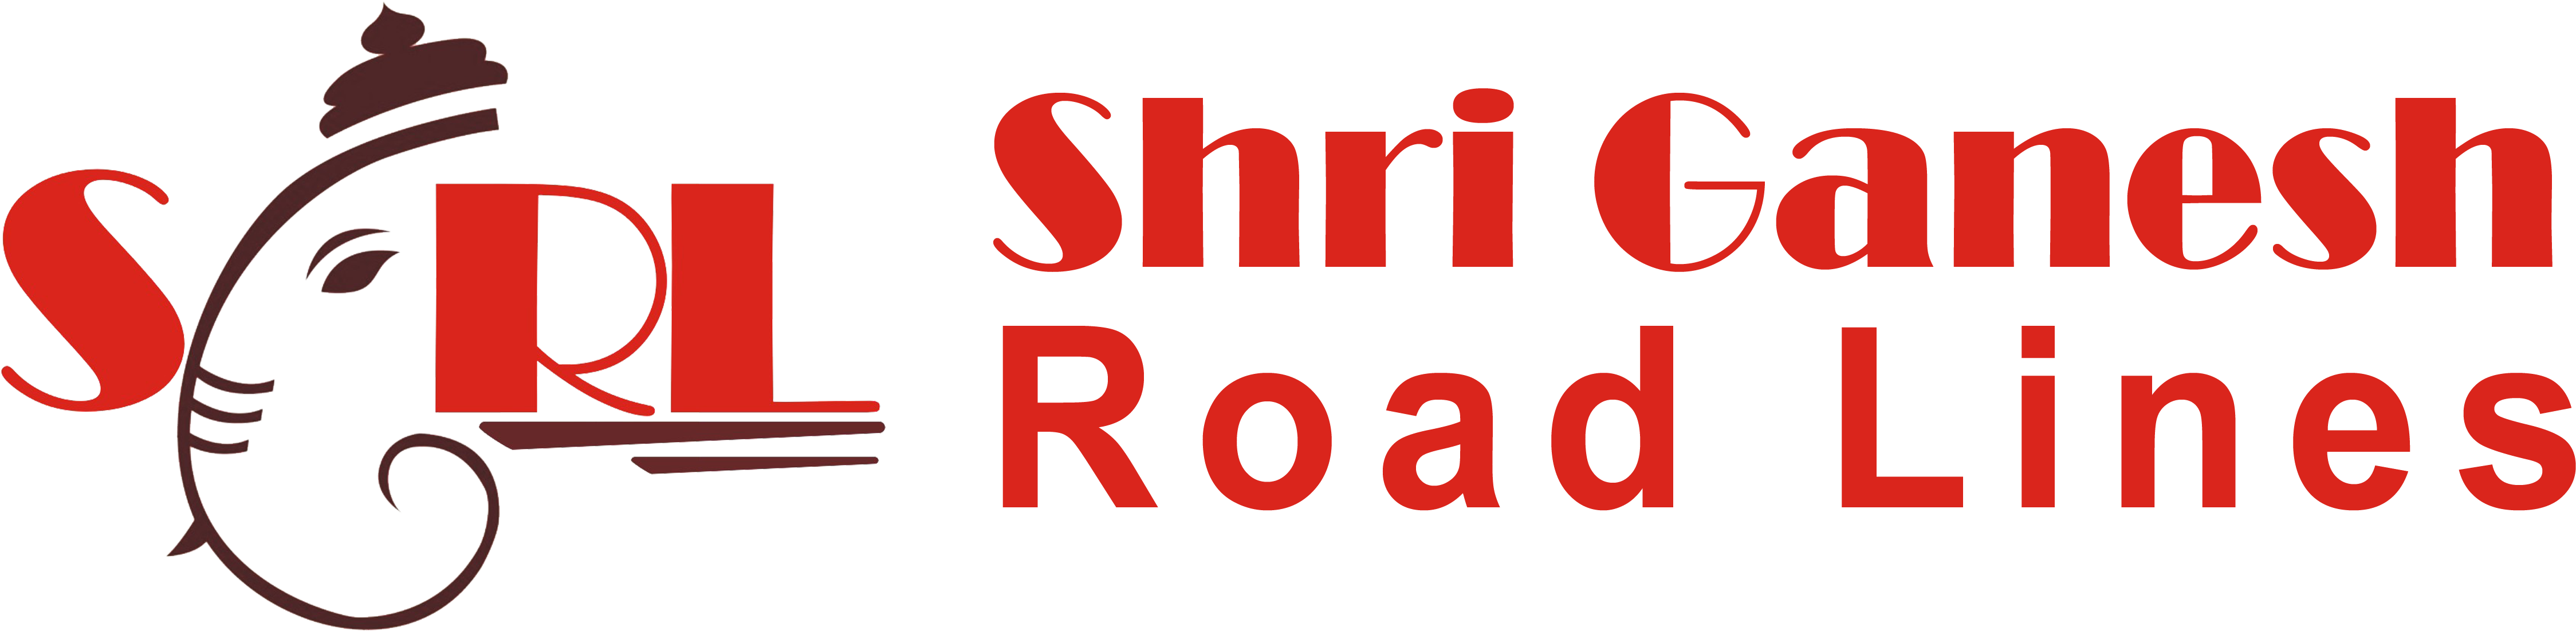 Shri Ganesh Road Liens, Office - Hot Tub Games By Pierre Audet 9781456828516 (paperback) (4800x1249), Png Download